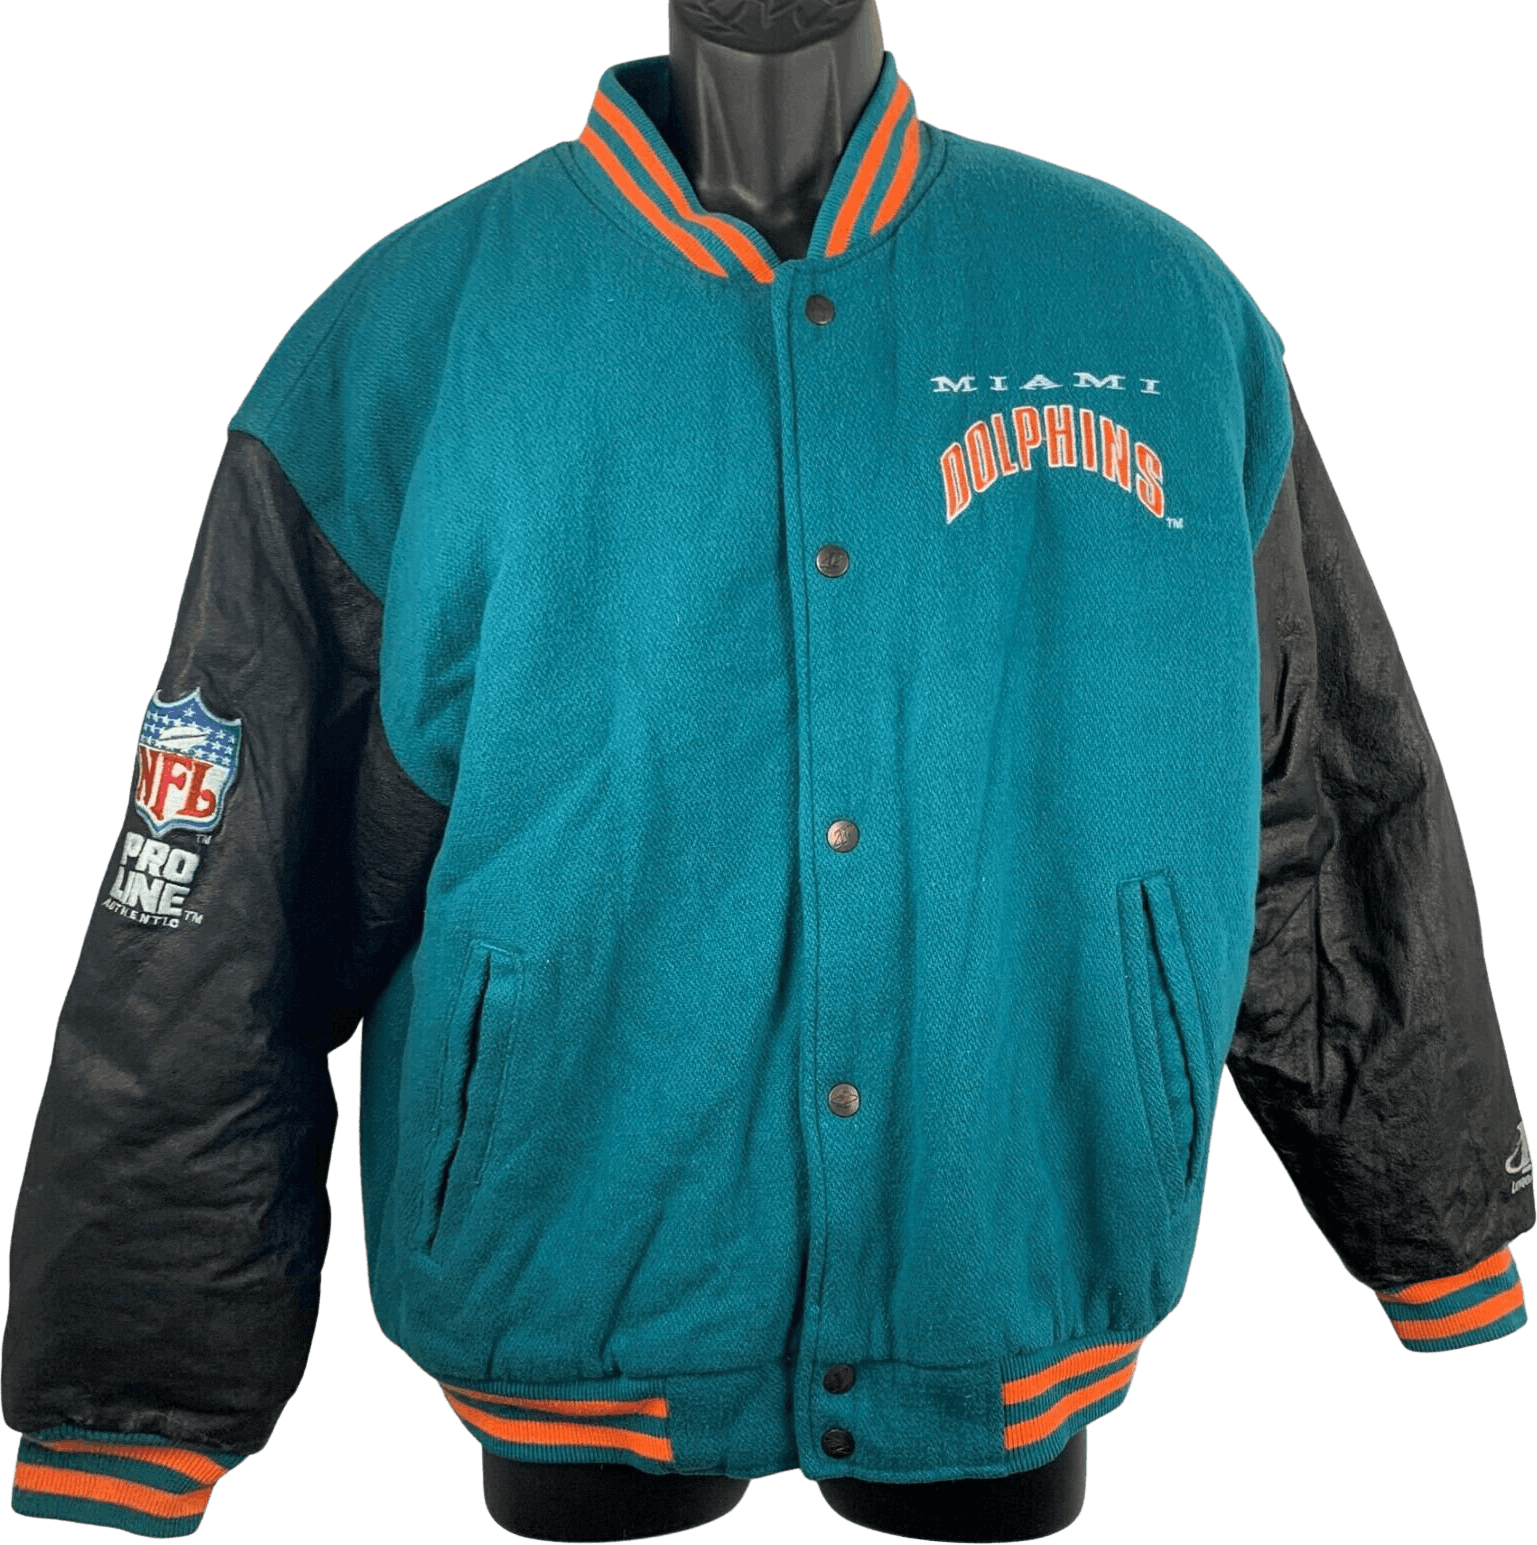 Vintage 80’s Men's Nfl Miami Dolphins Varsity Jacket by Pro Line | Shop ...